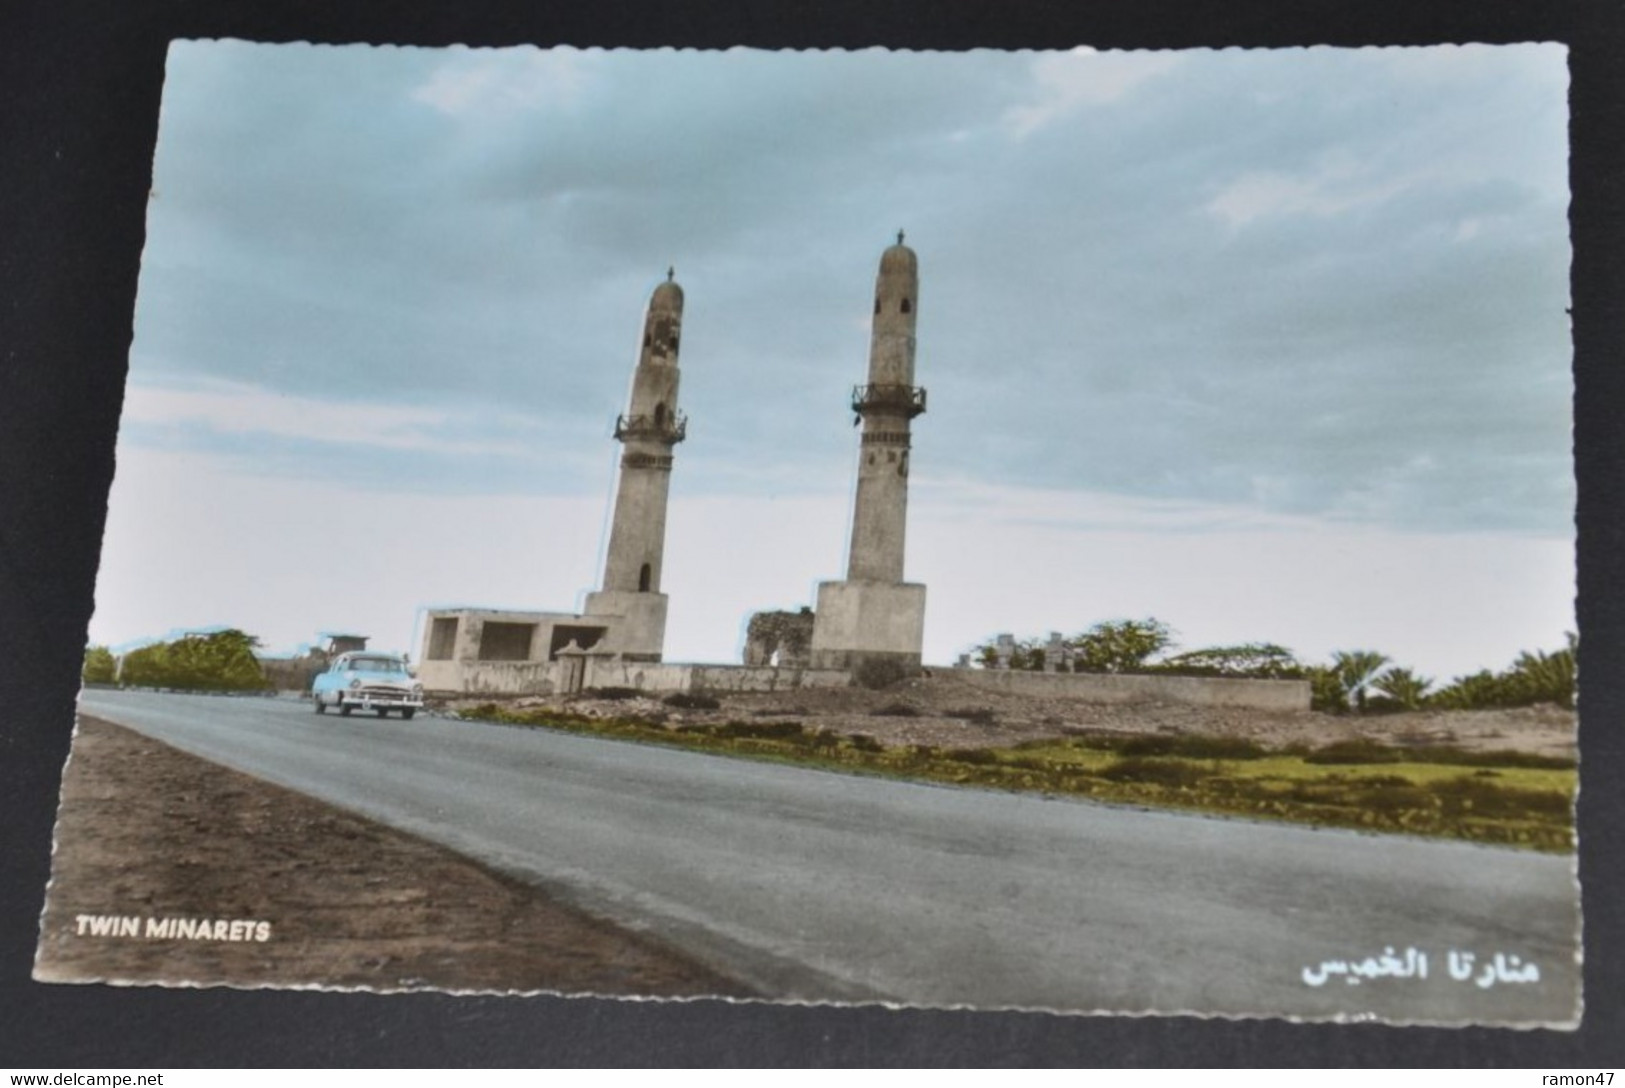 Twin Minarets - M. Shakib, General Stores, Barain - Baharain